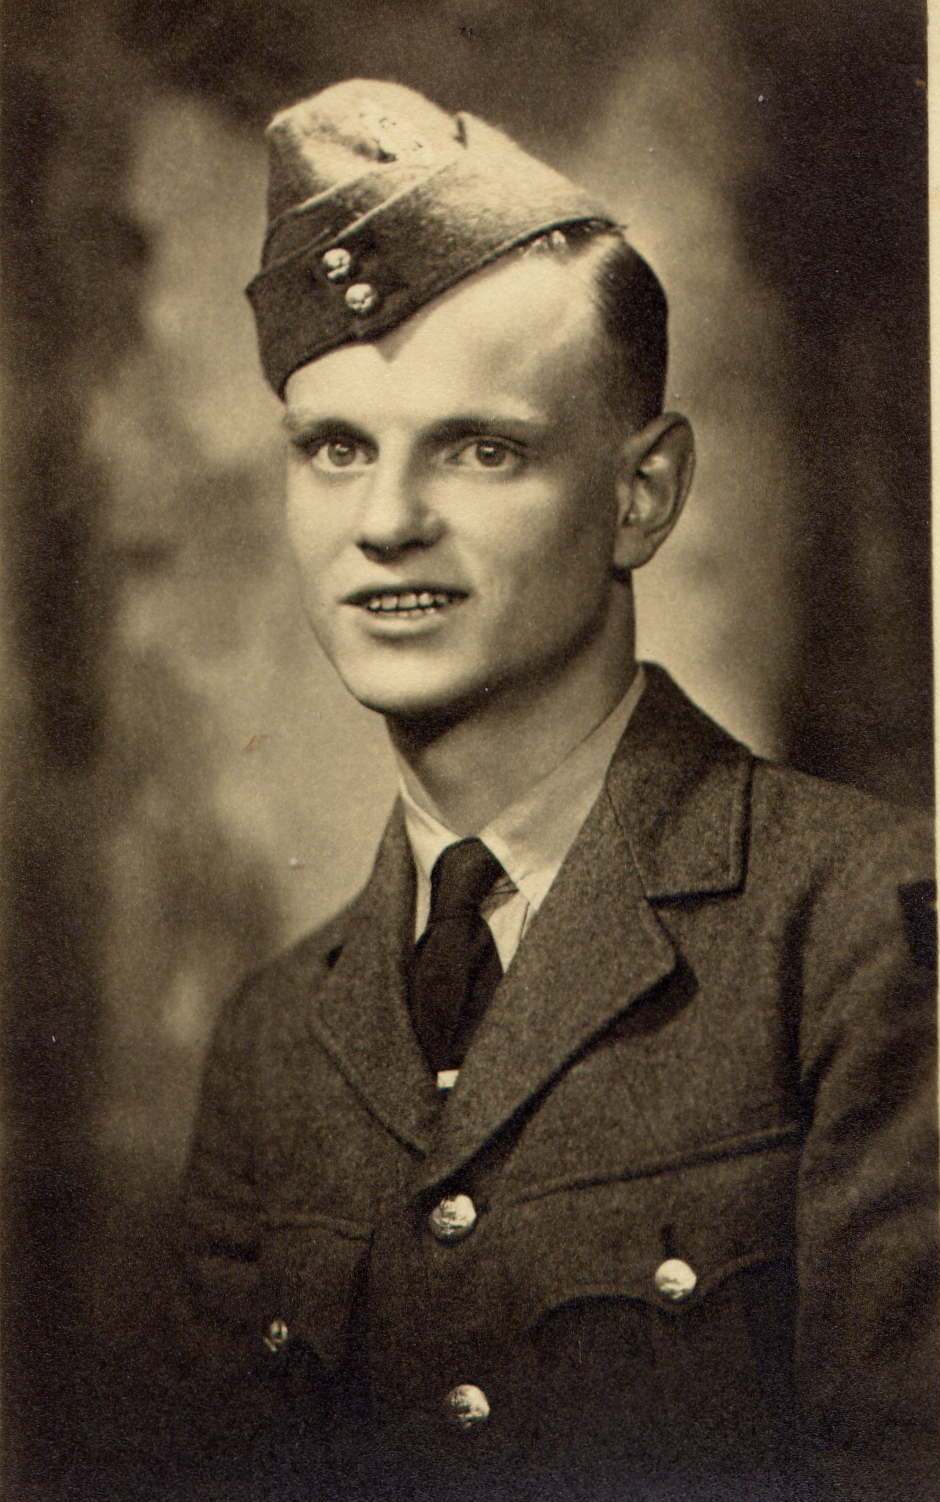 John Lawrie in RAF in 1940